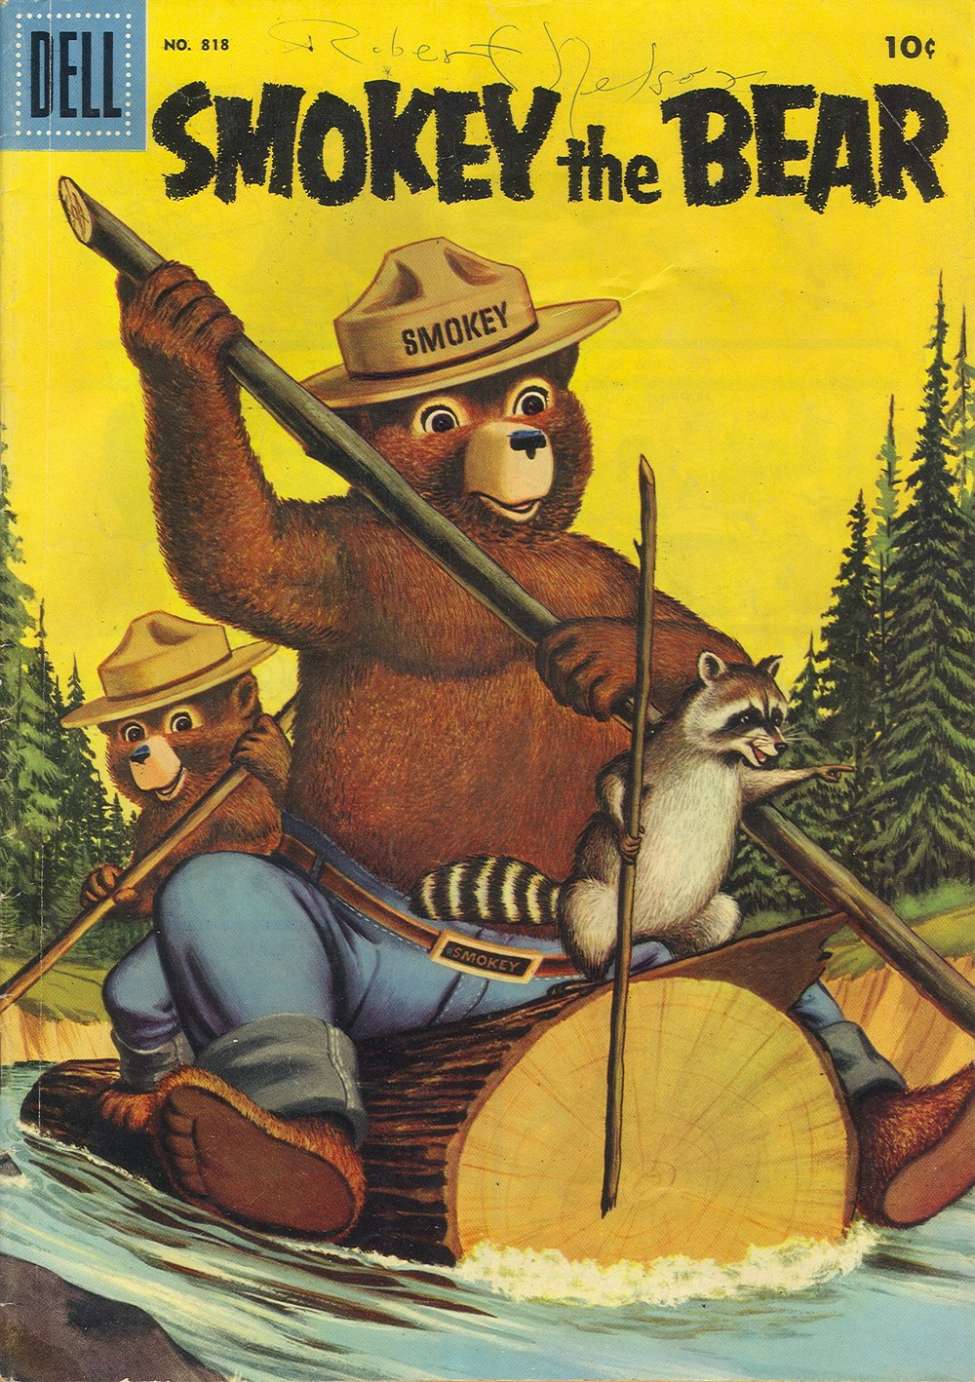 Comic Book Cover For 0818 - Smokey Bear